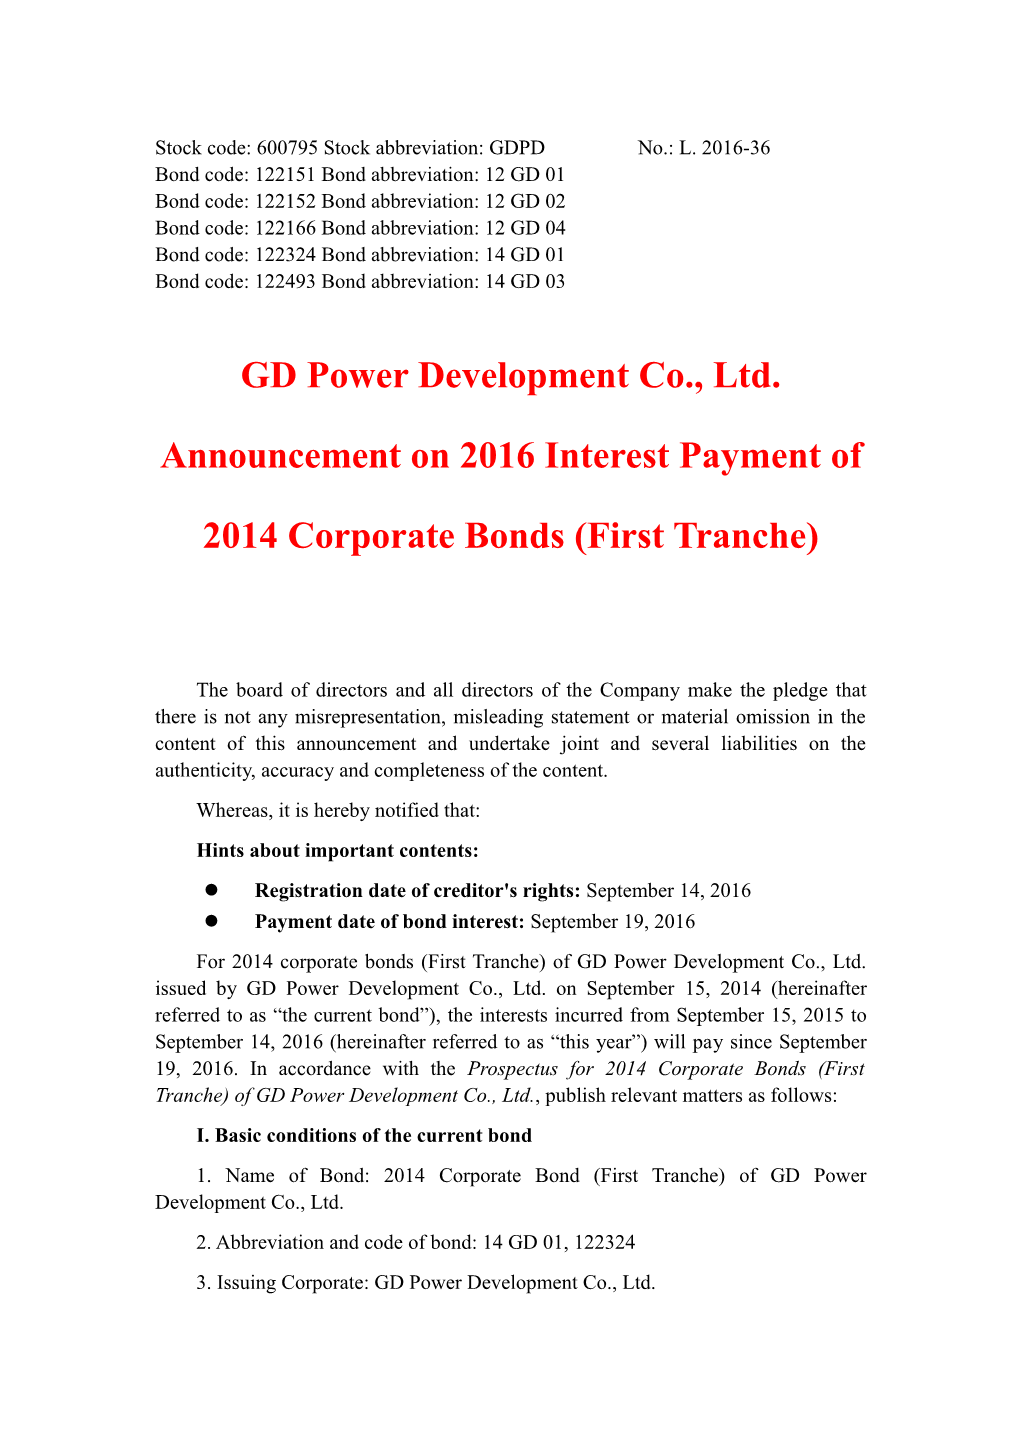 Public Announcement of GD Power Development Co., Ltd. on 2014 Interests Payment of 2012